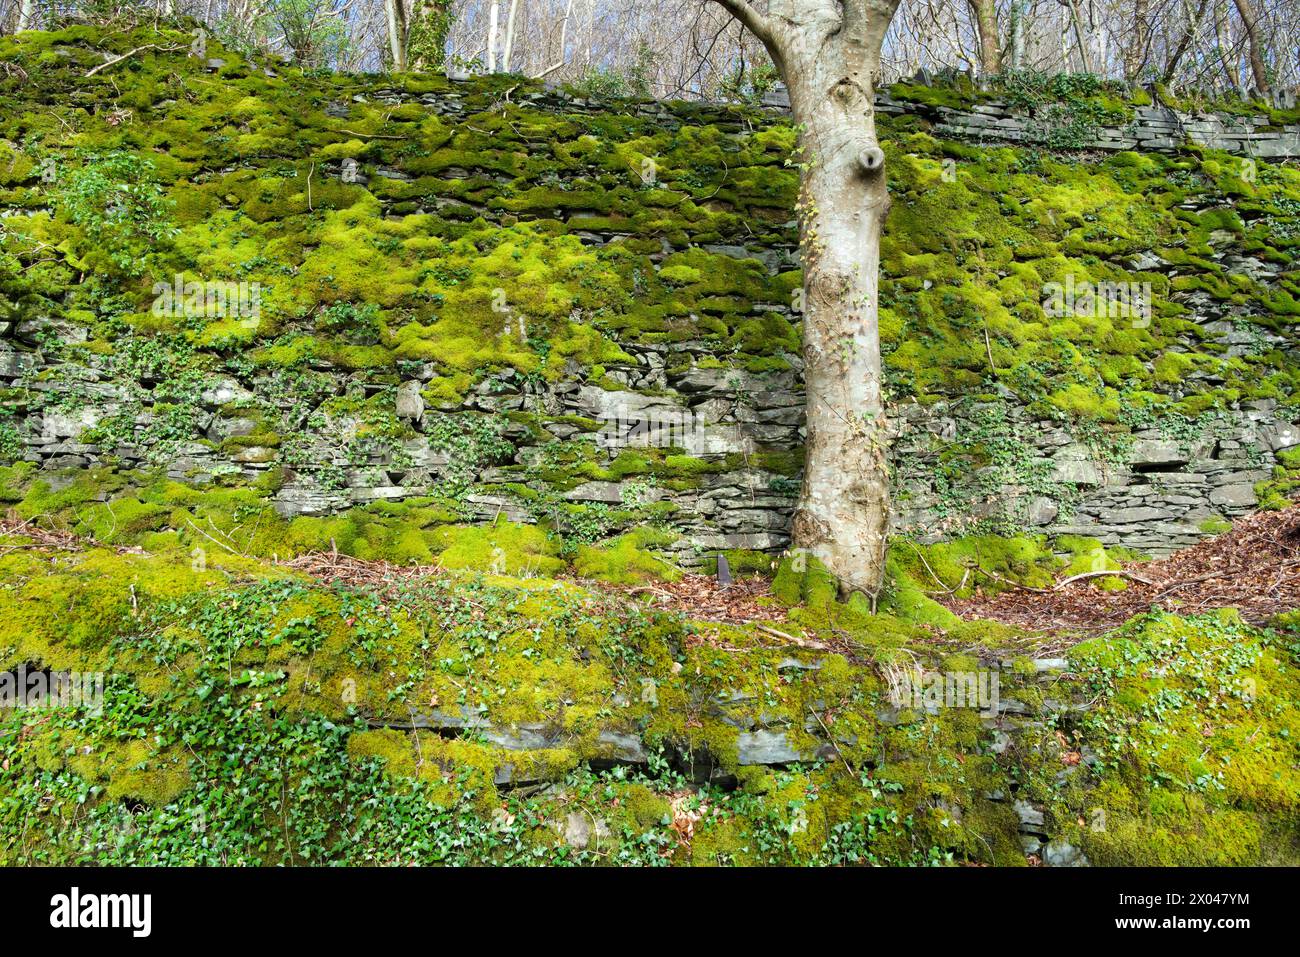 This mossy wall is on Lon Ddinas lane in North Wales near Tregarth. The species include Eurhynchium striatum and Neckera complanata. Stock Photo